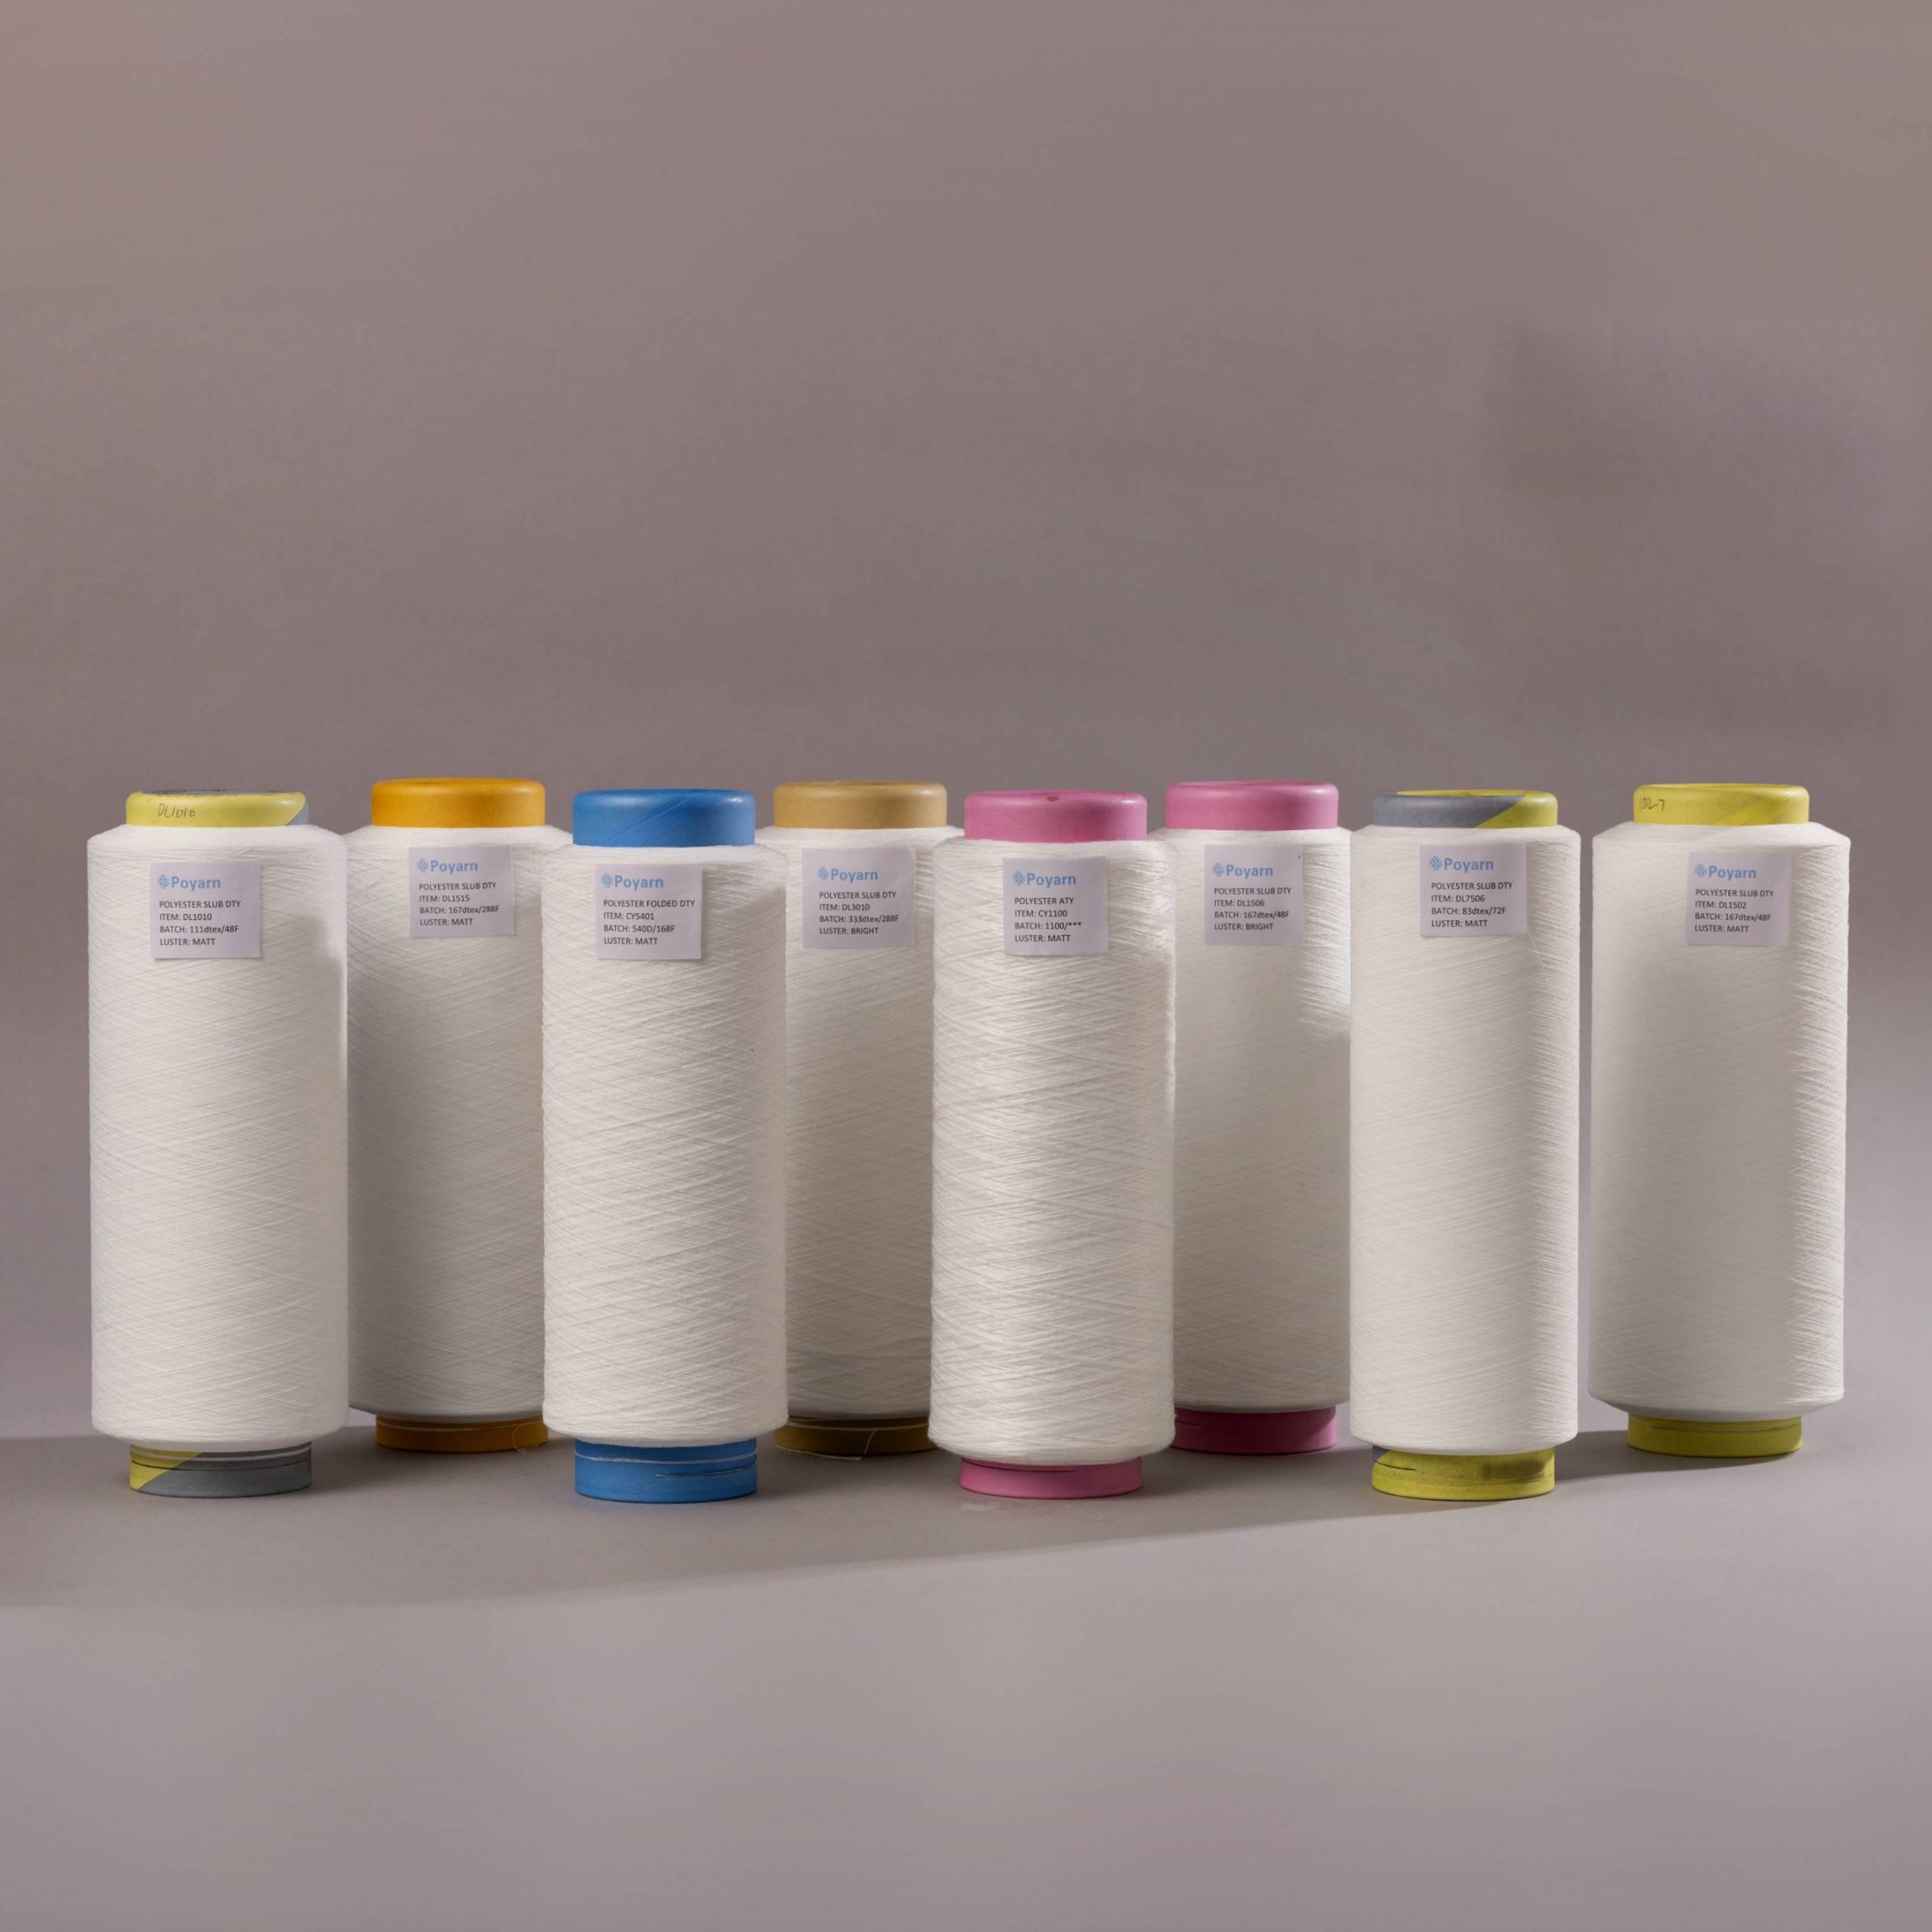 100% polyester yarn